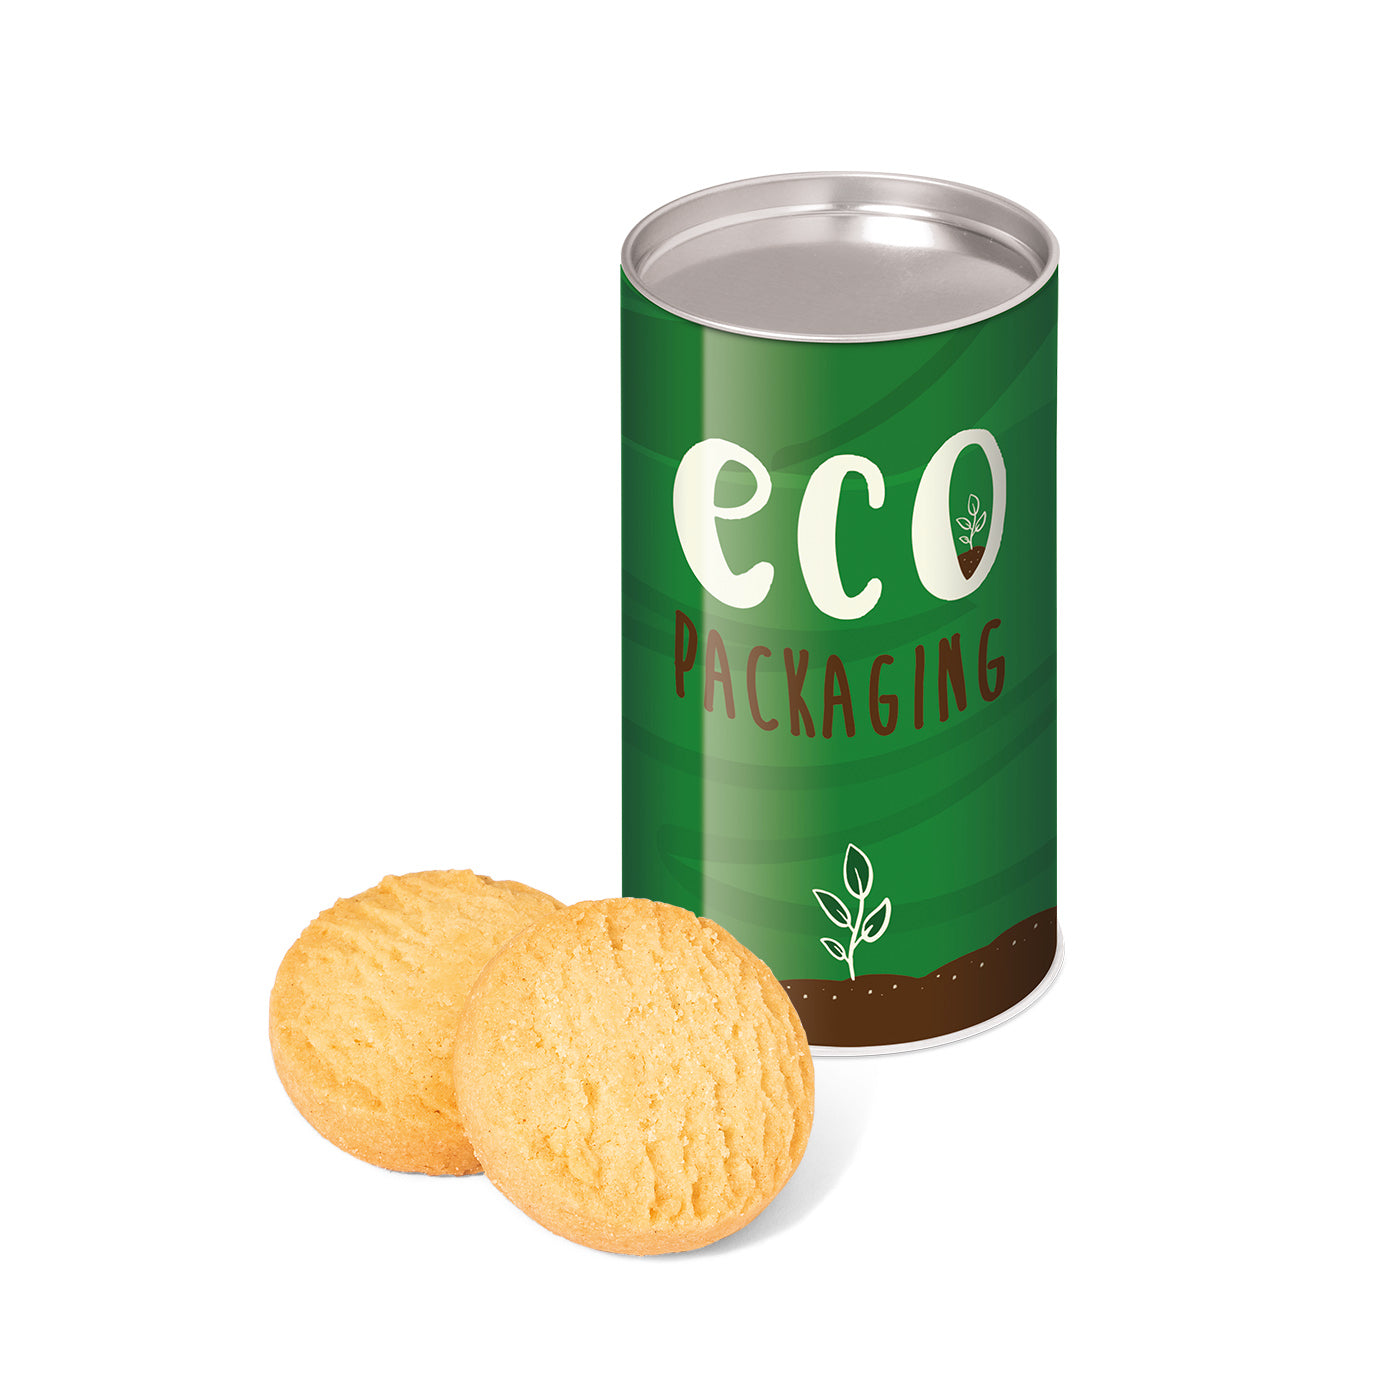 Eco Range - Small snack tube - Mini Shortbread Biscuits  Black and White London